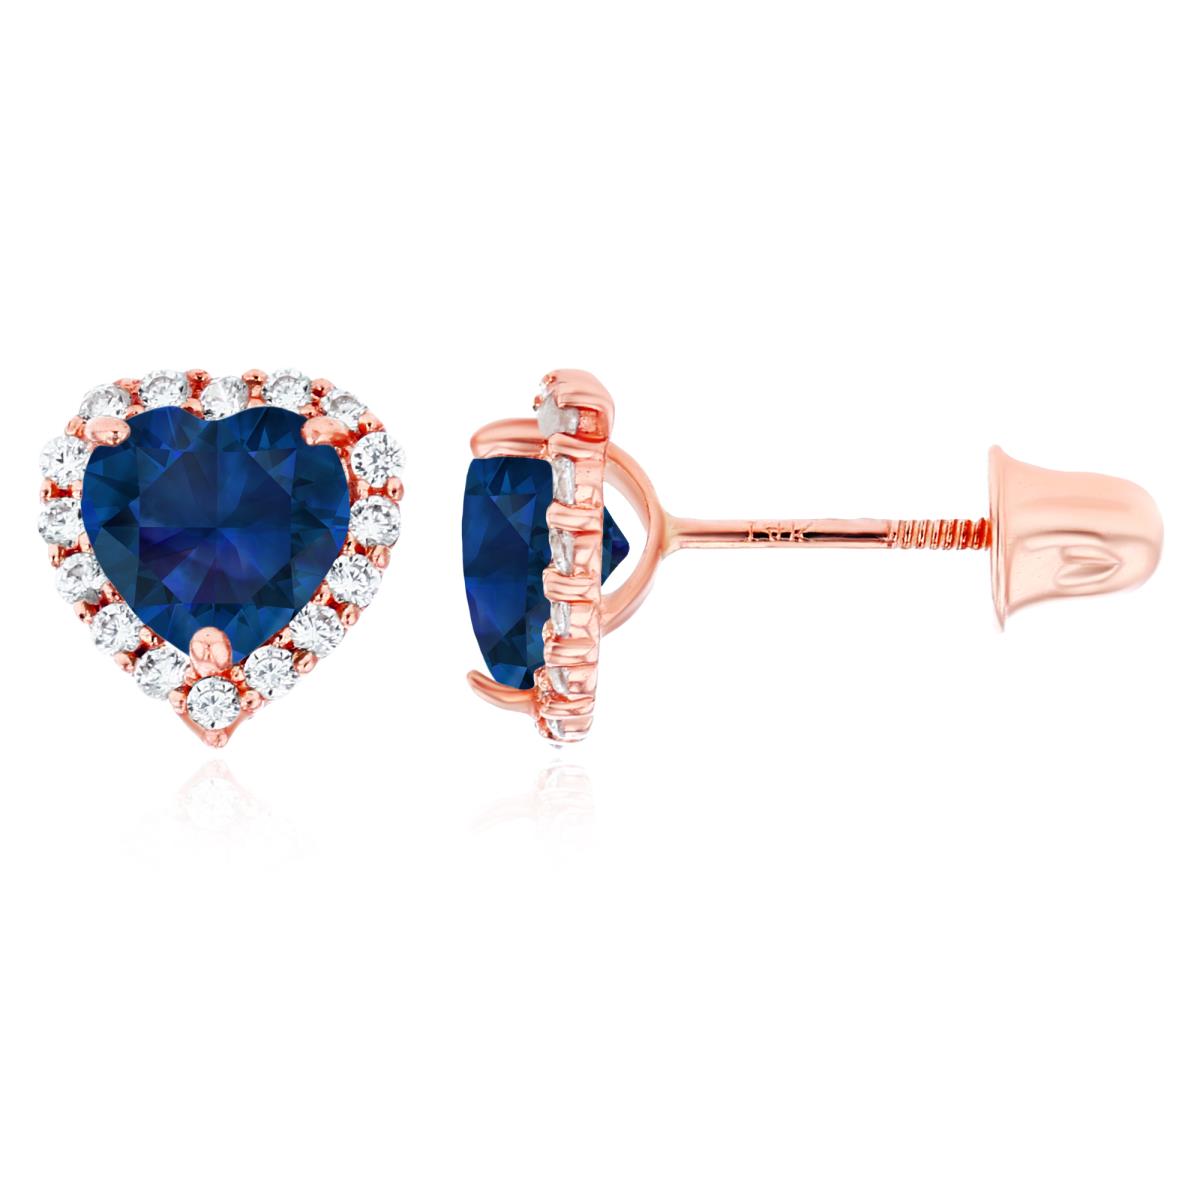 14K Rose Gold 5mm Heart Created Blue Sapphire & 1mm Created White Sapphire Halo Screwback Earrings